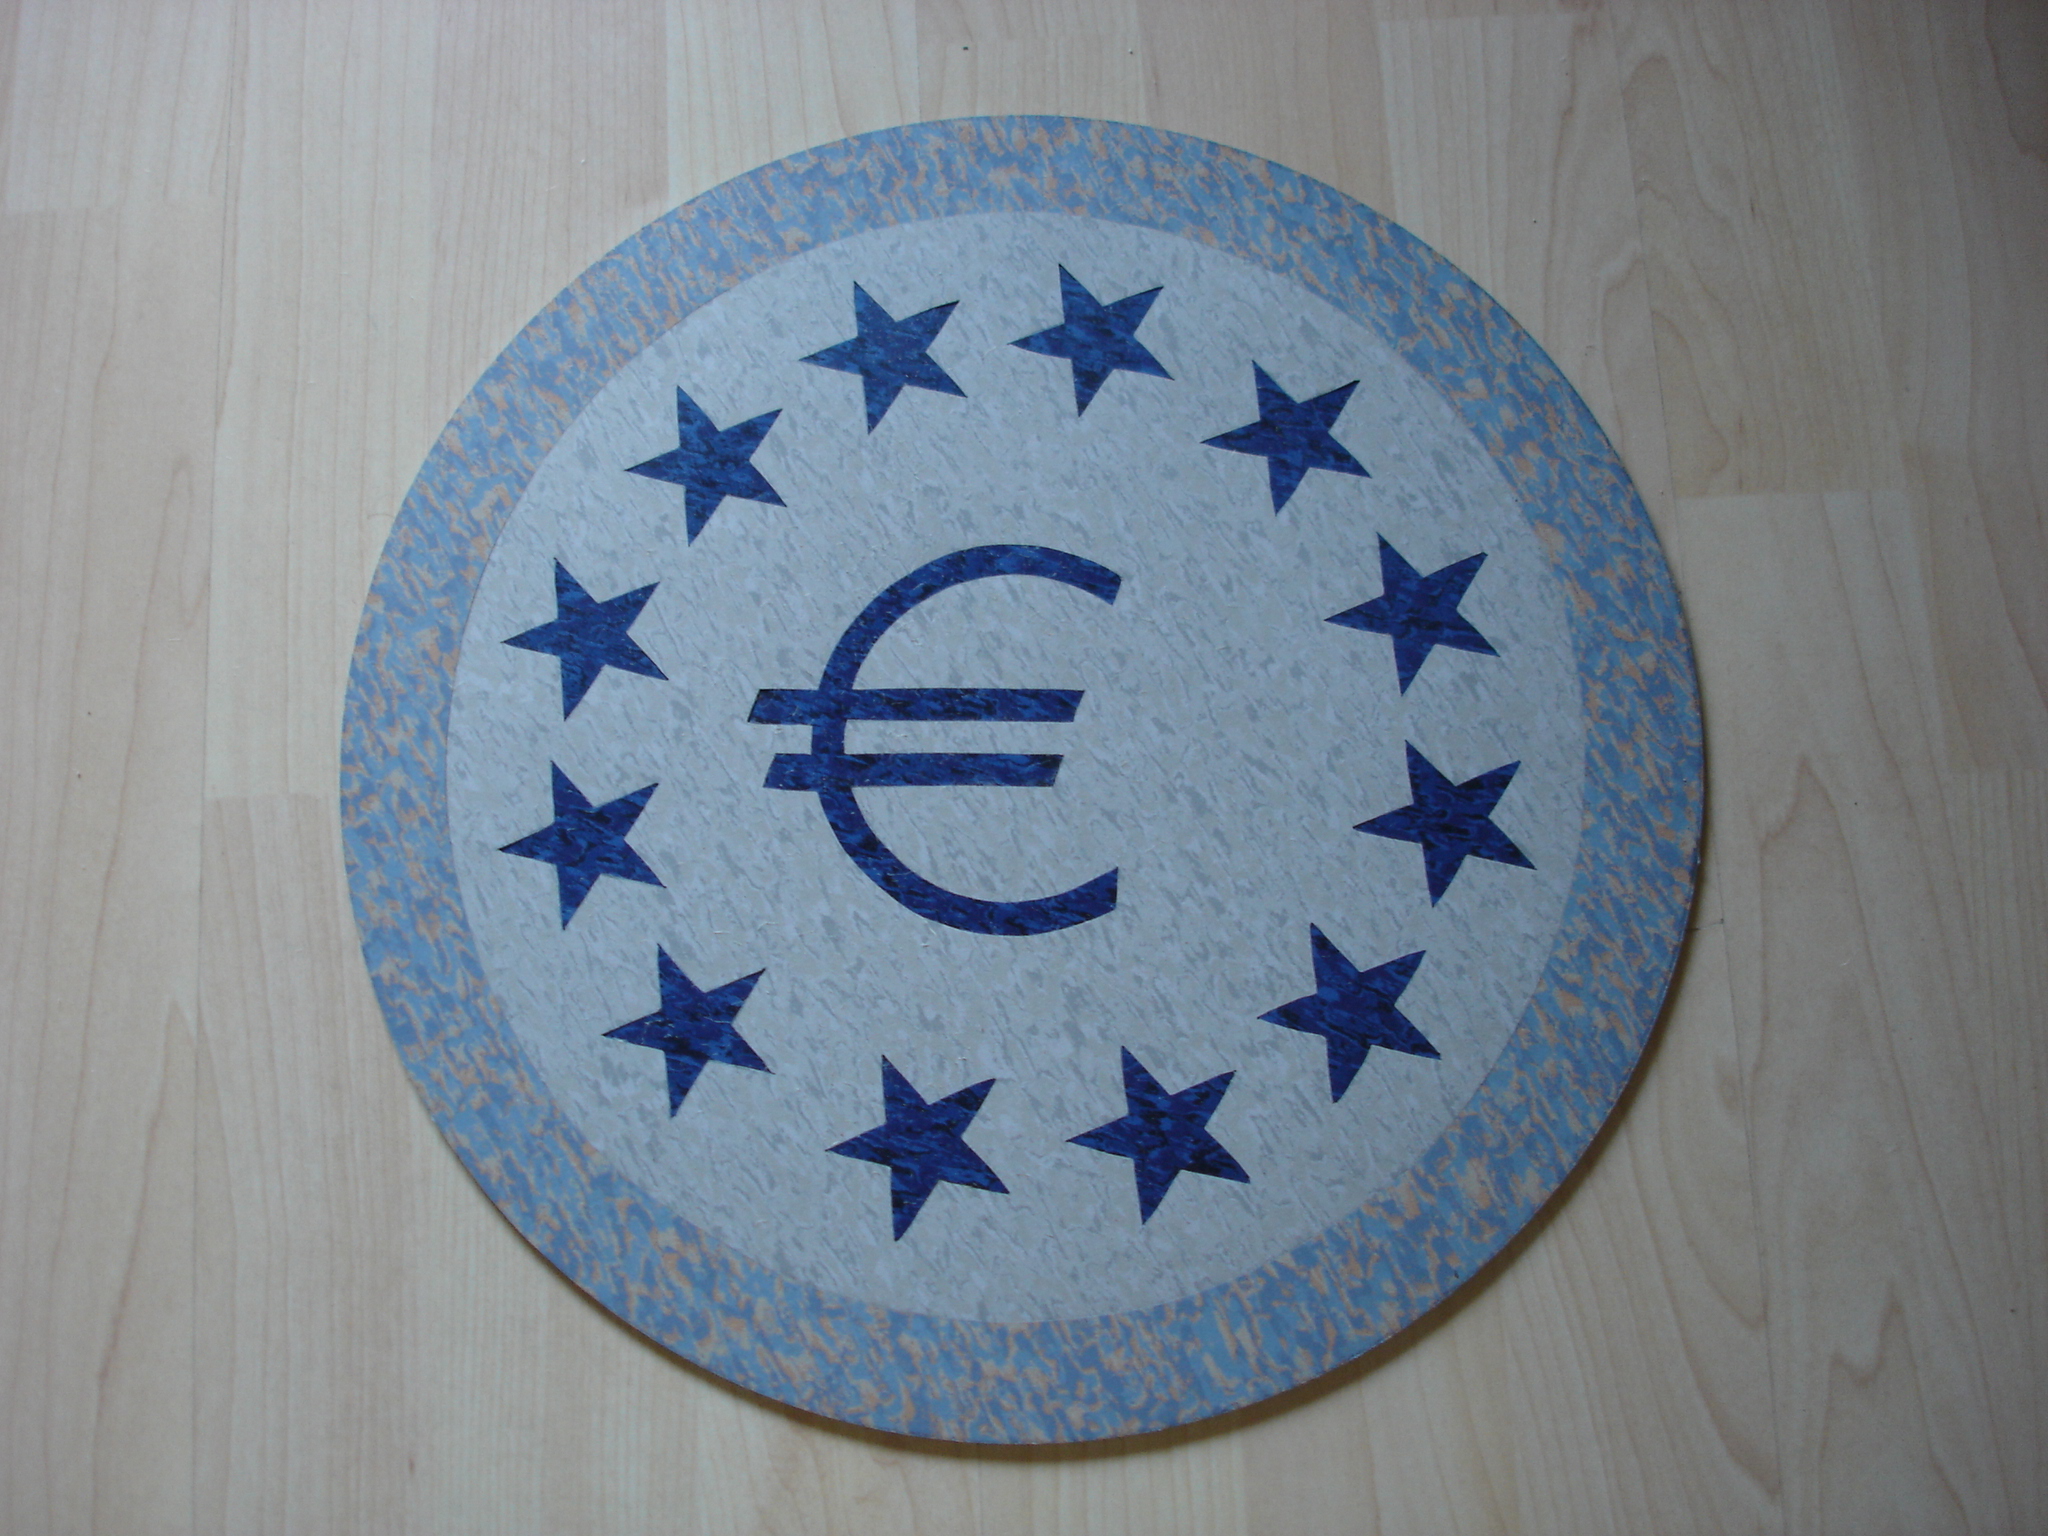 Rozeta  EURO marmoleum.JPG